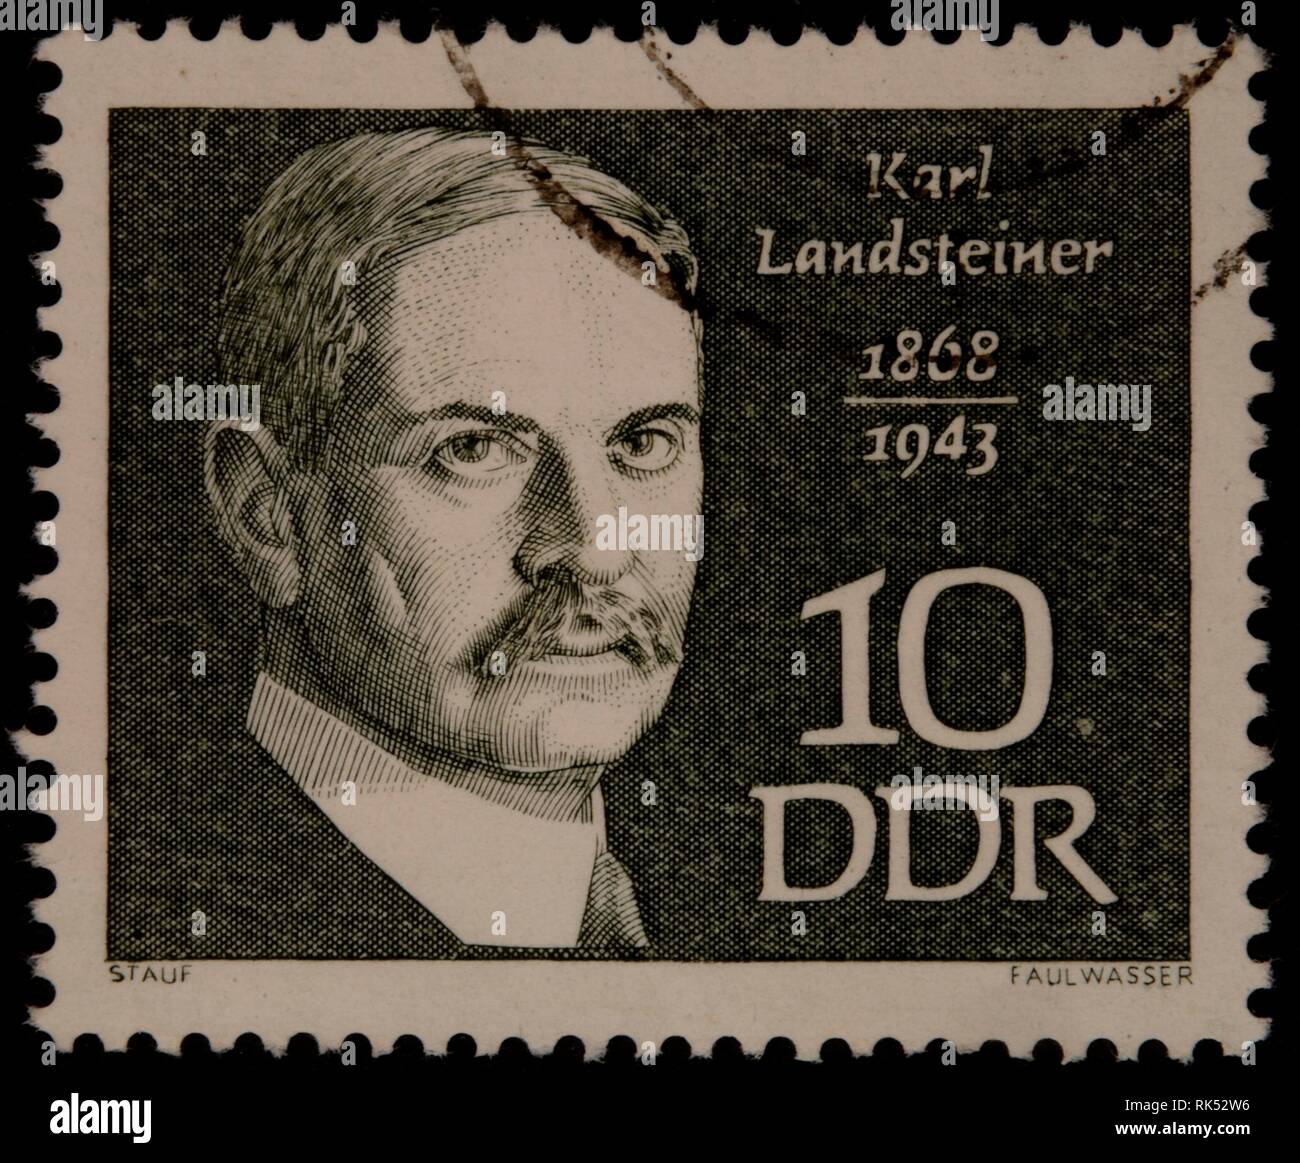 Karl Landsteiner, an Austrian immunologist and patholigist, portrait on a DDR stamp, Germany, Europe Stock Photo